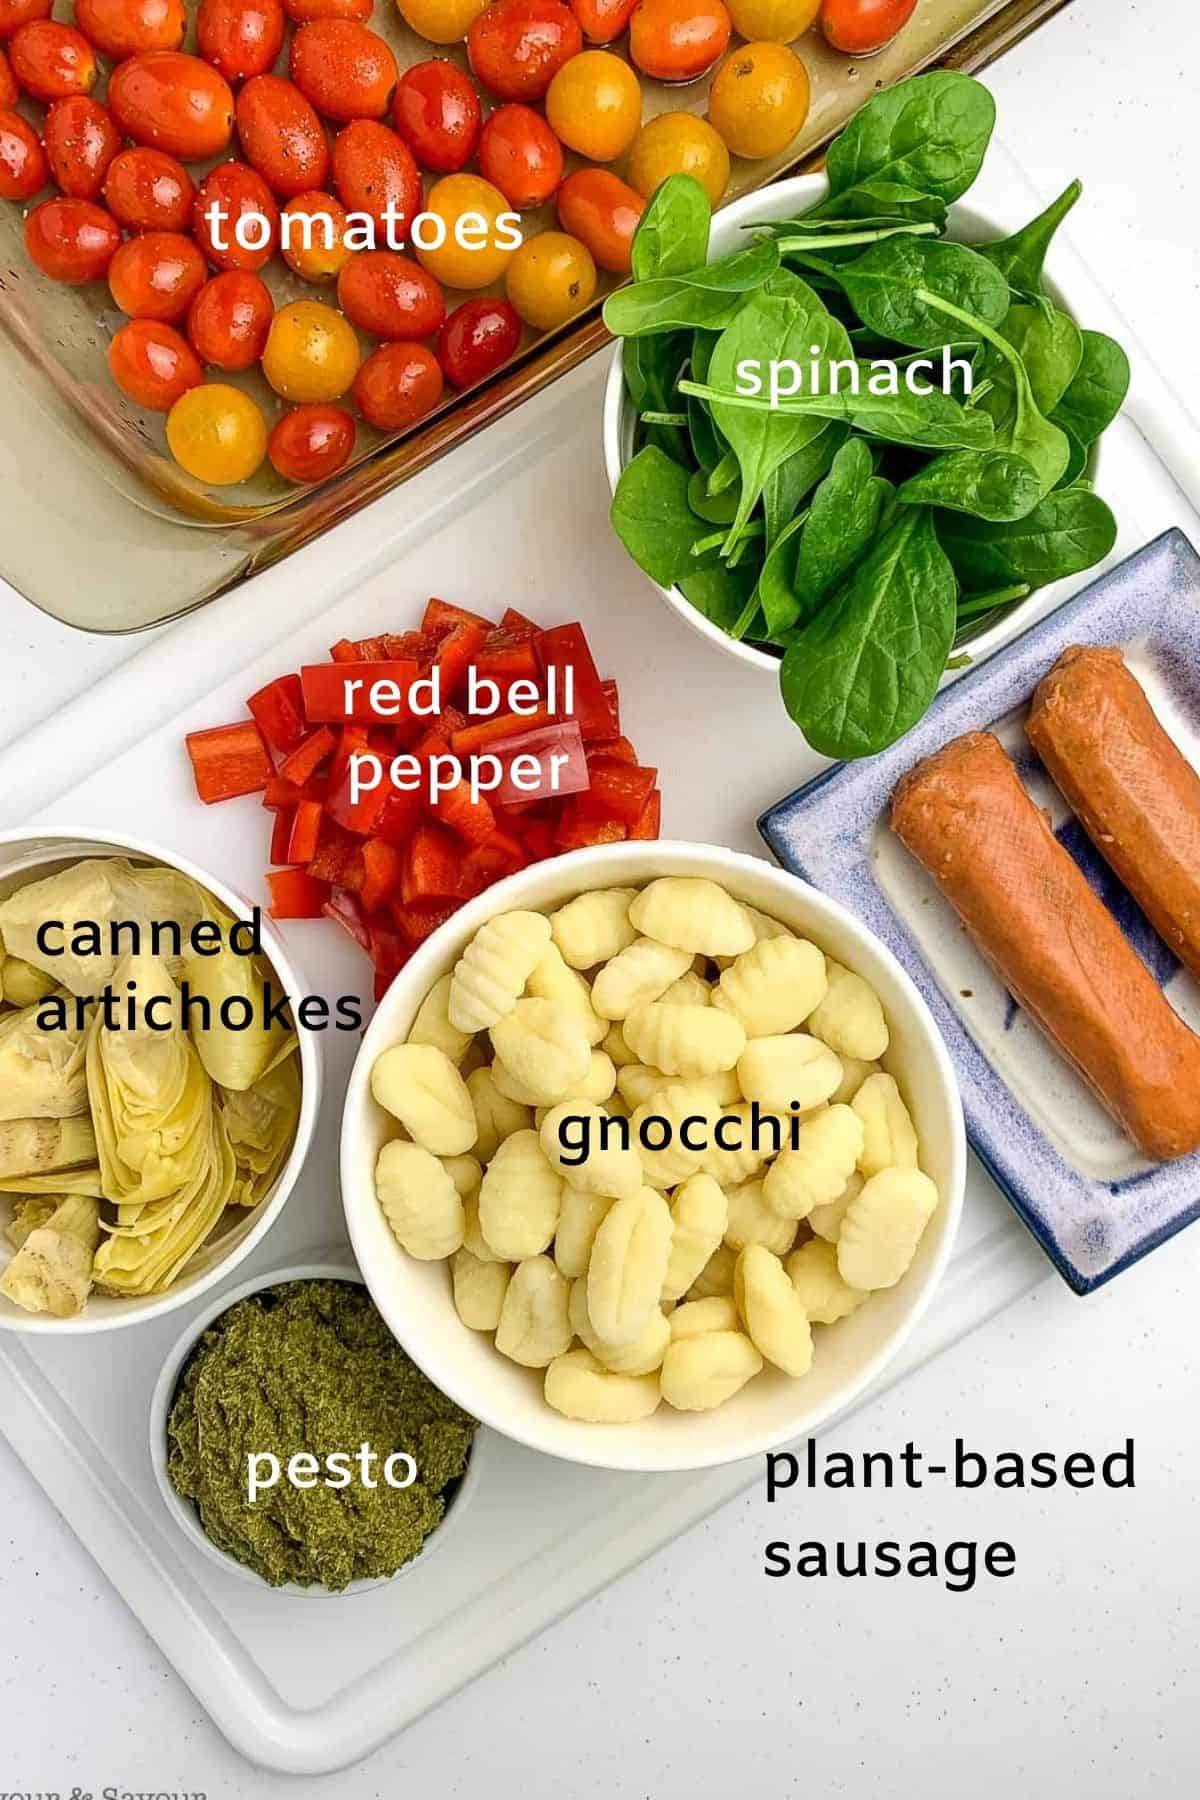 Labelled ingredients for vegetarian pesto gnocchi recipe